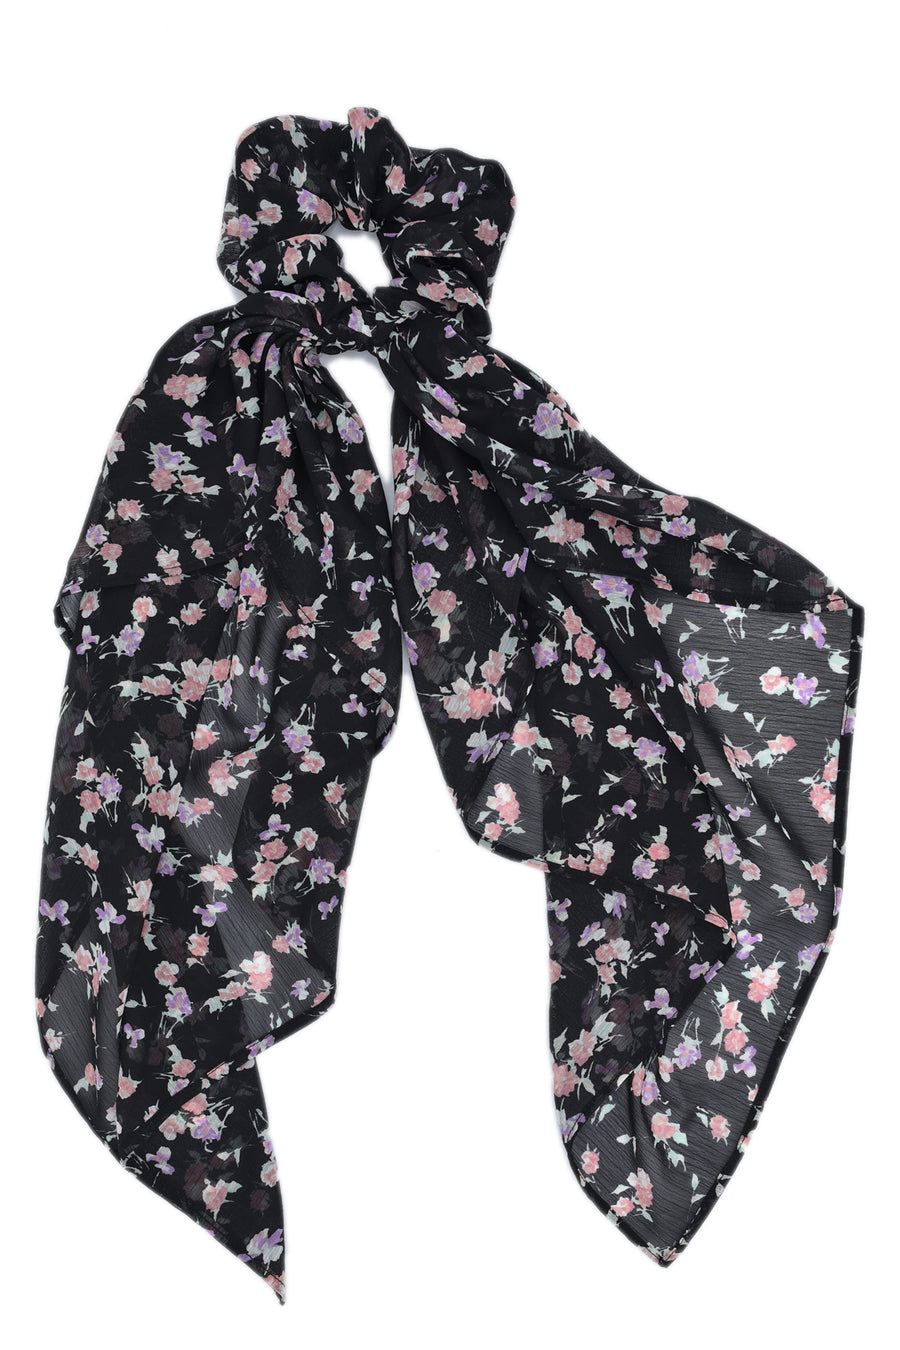 Long black & pink scrunchie scarf